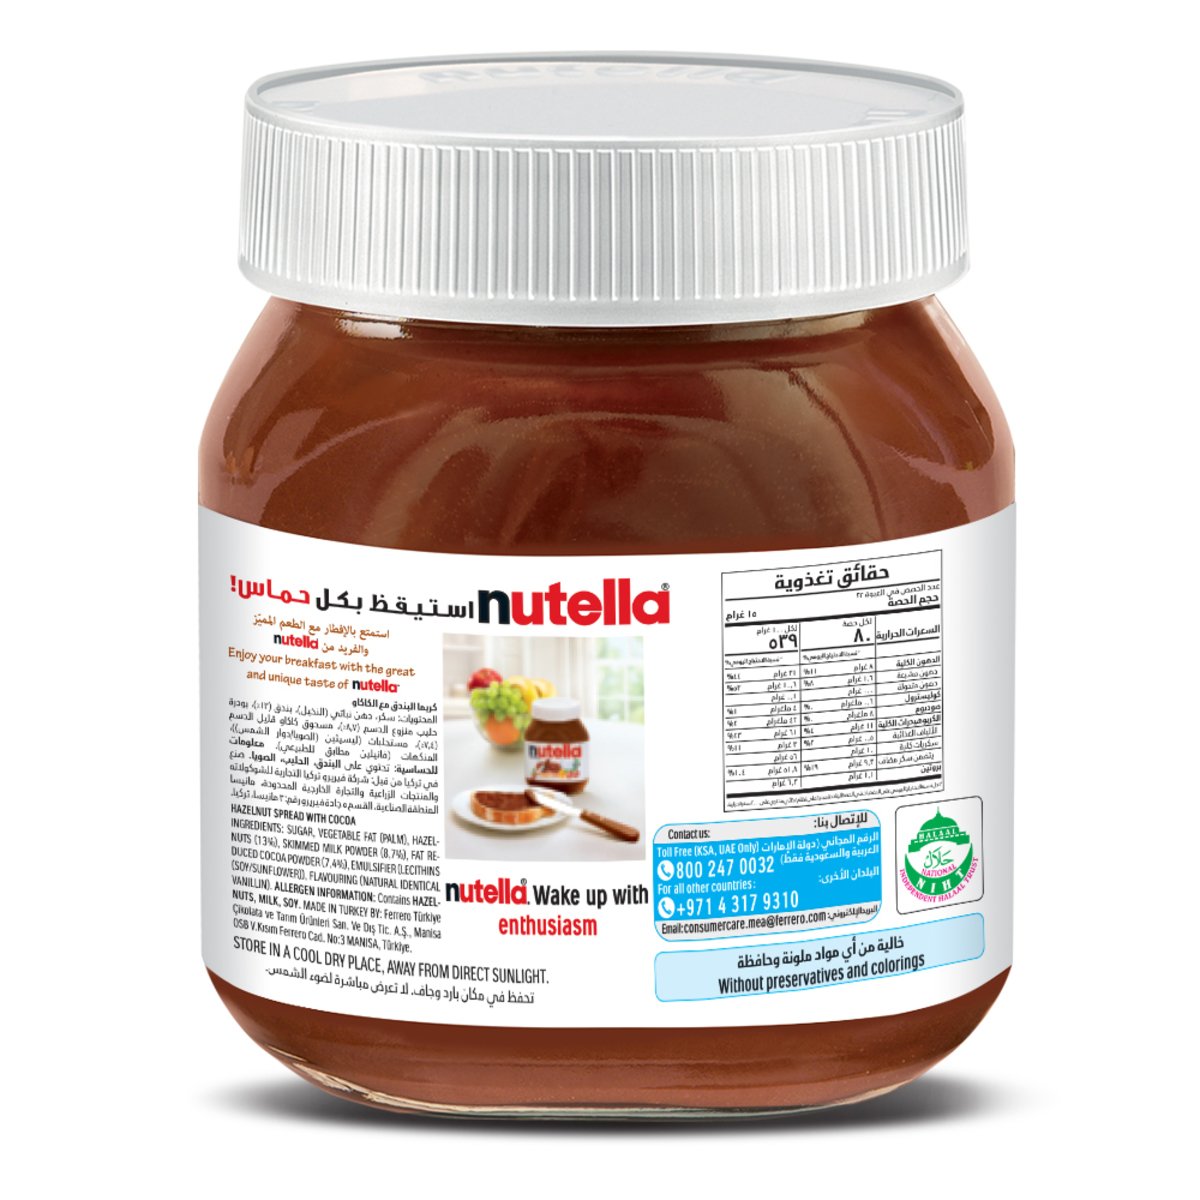 Nutella Hazelnut Spread with Cocoa 400g + 40g